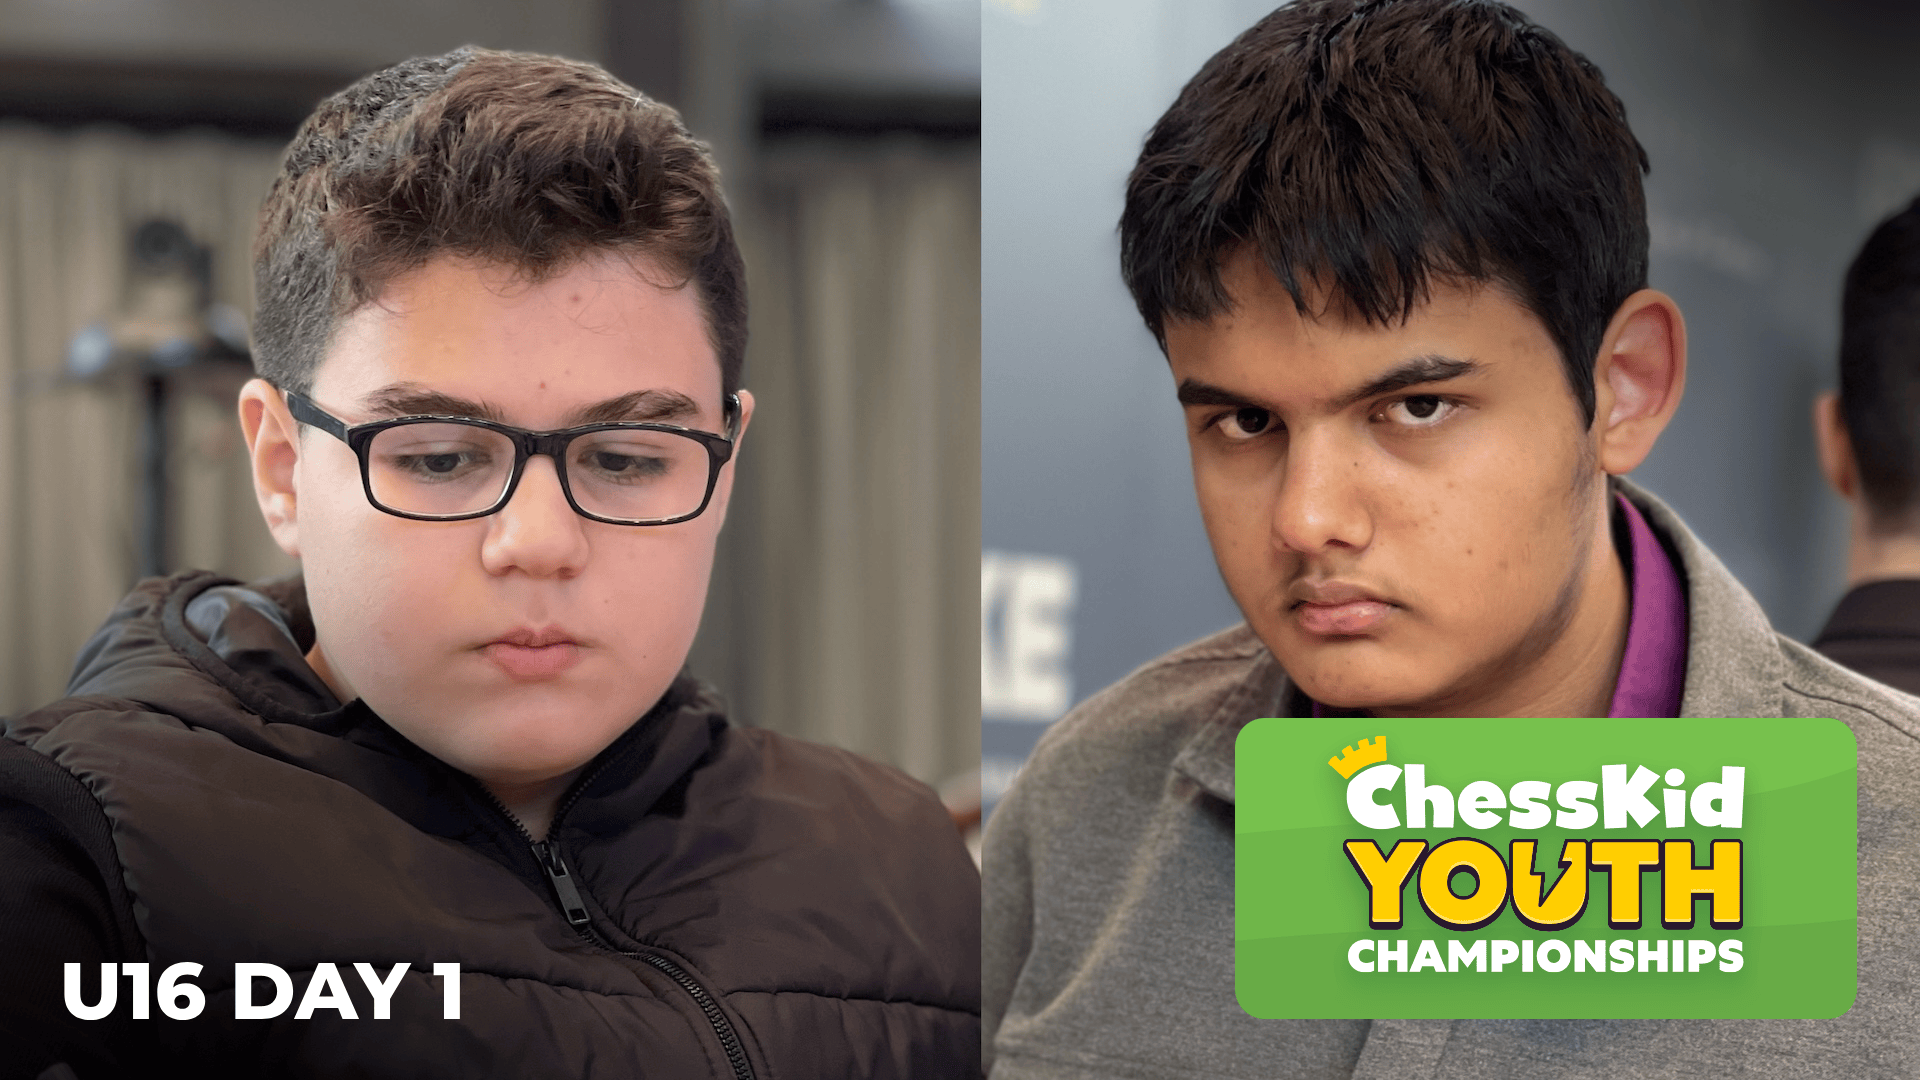 Erdogmus, Mishra On Course To Meet In ChessKid U16 Youth Championship Final